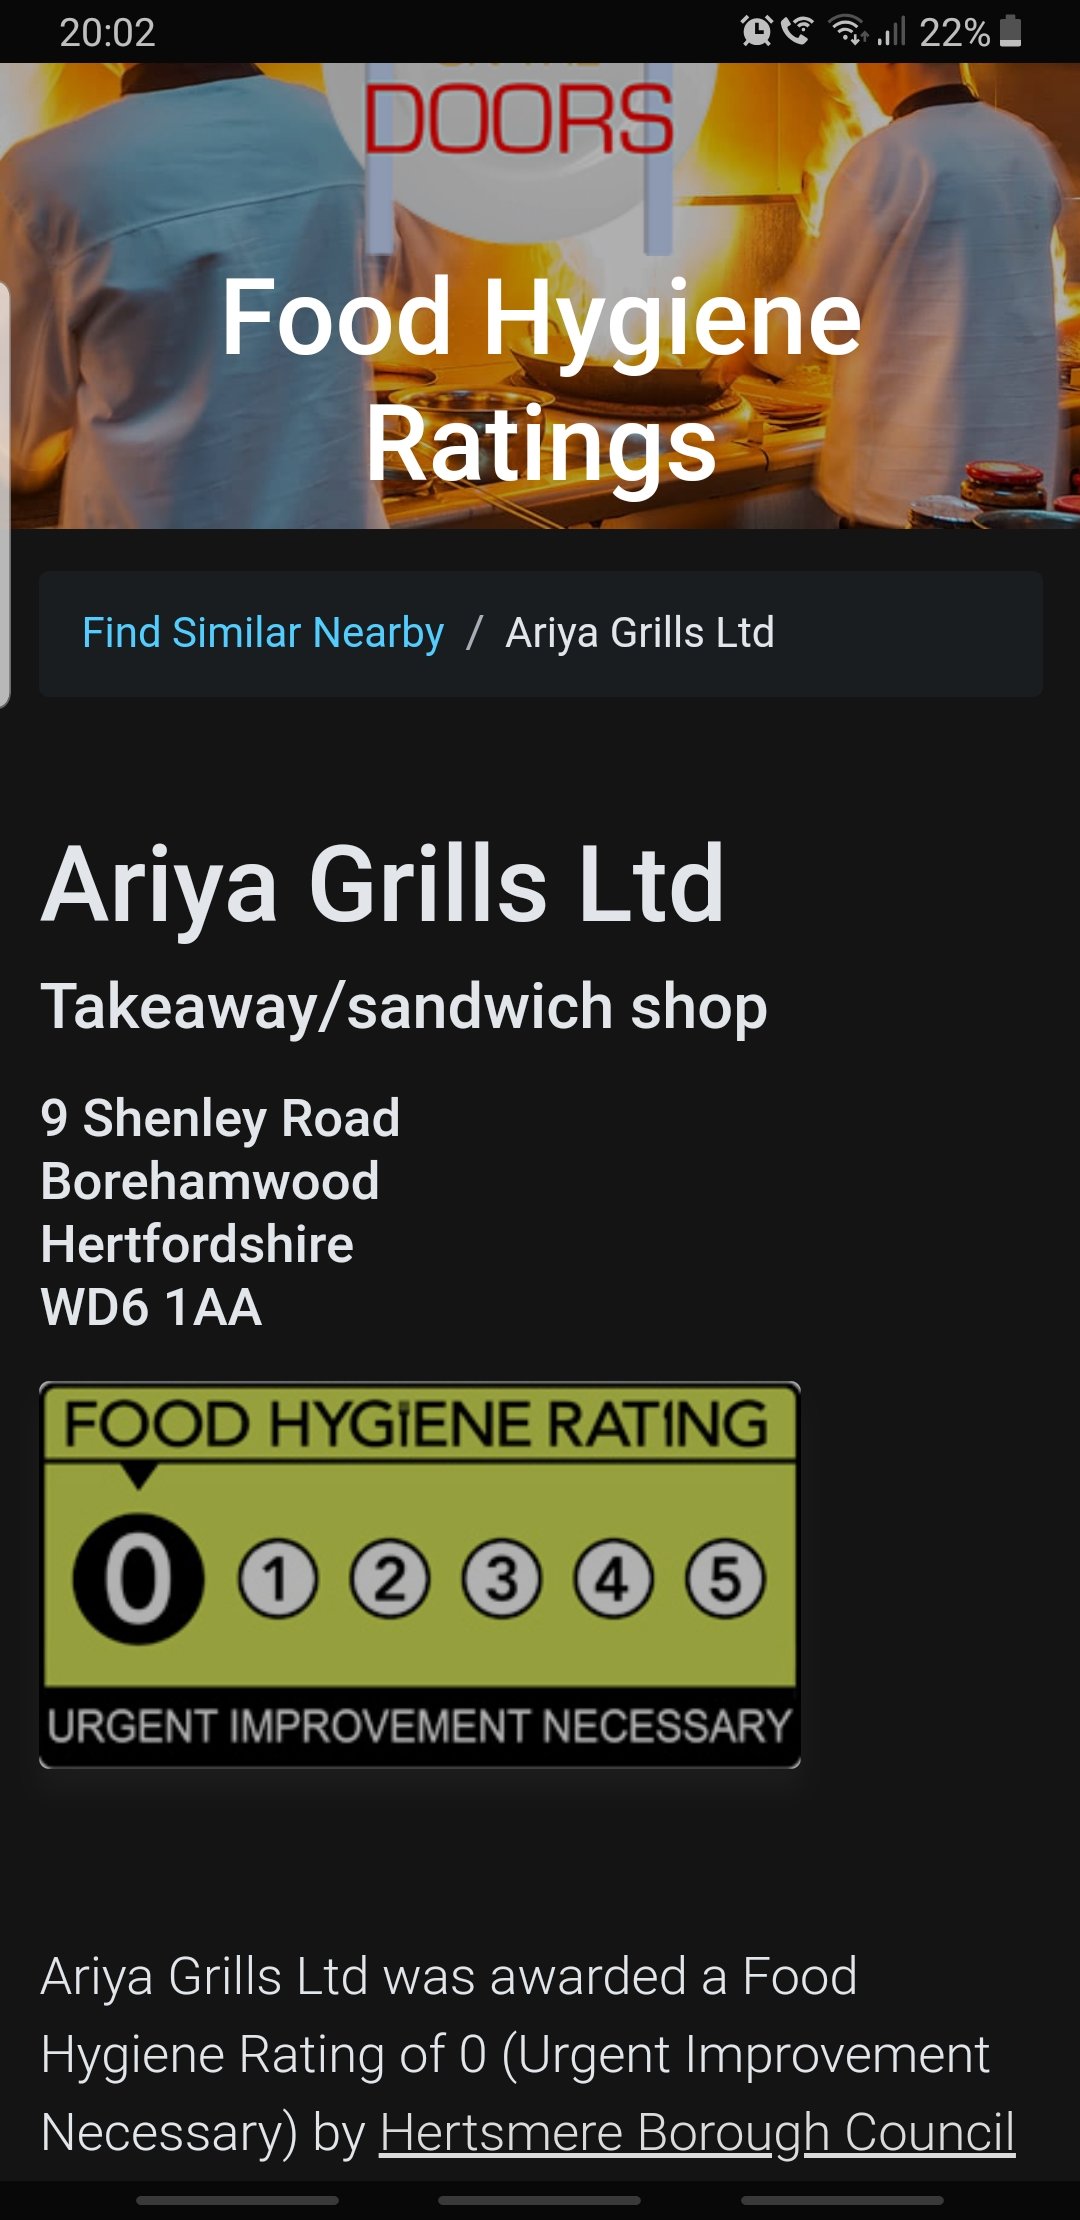 Ariya Grills Ltd